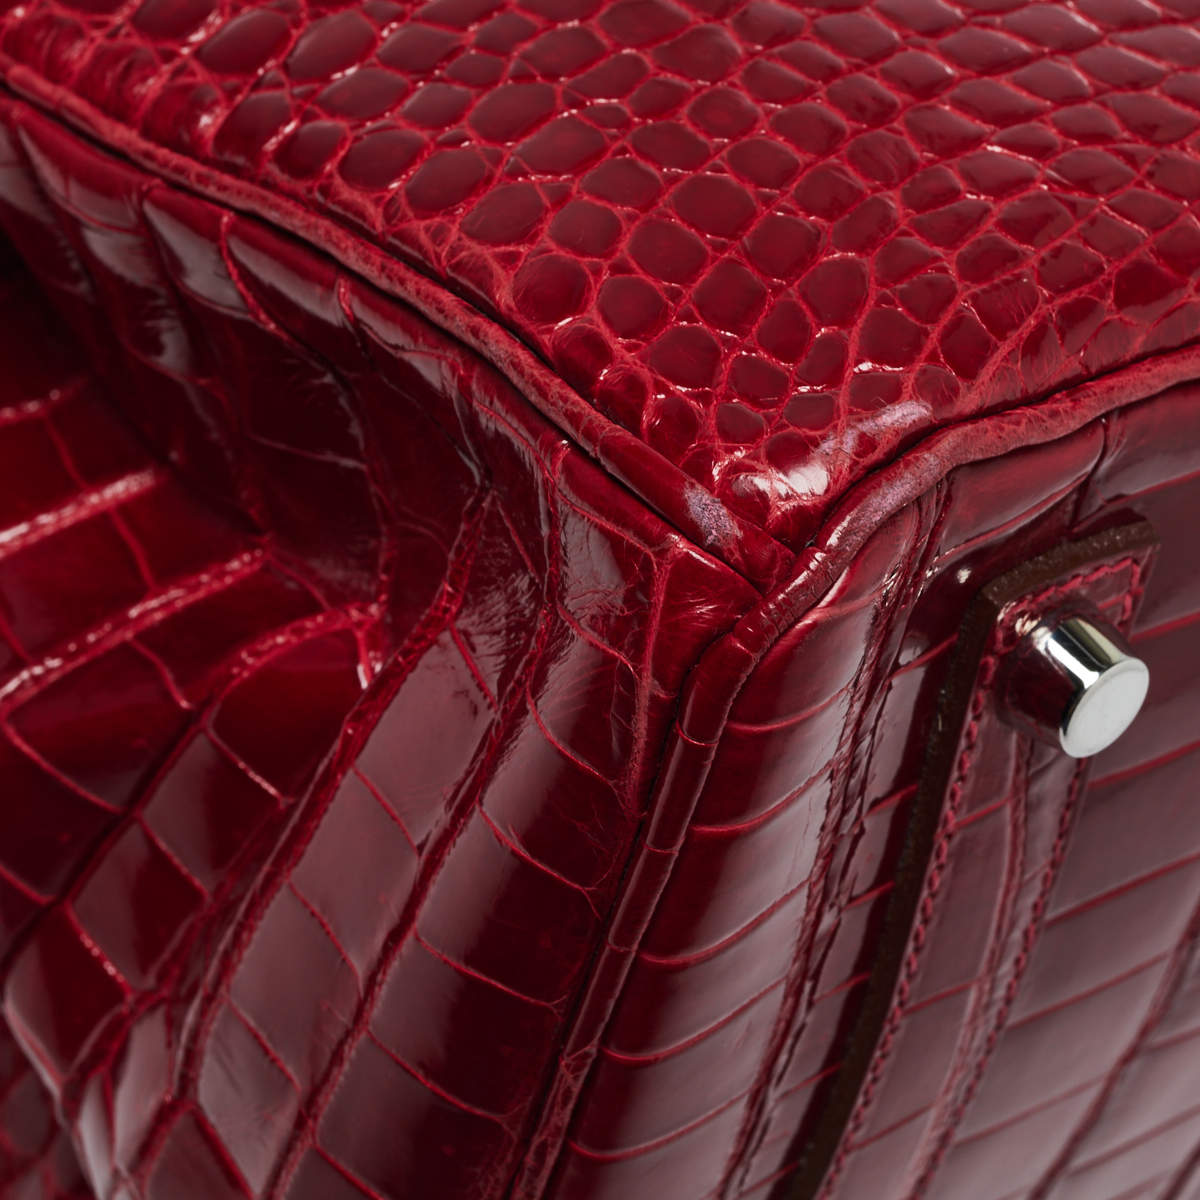 Hermes Braise Red Crocodile Birkin 25 Handbag - MAISON de LUXE